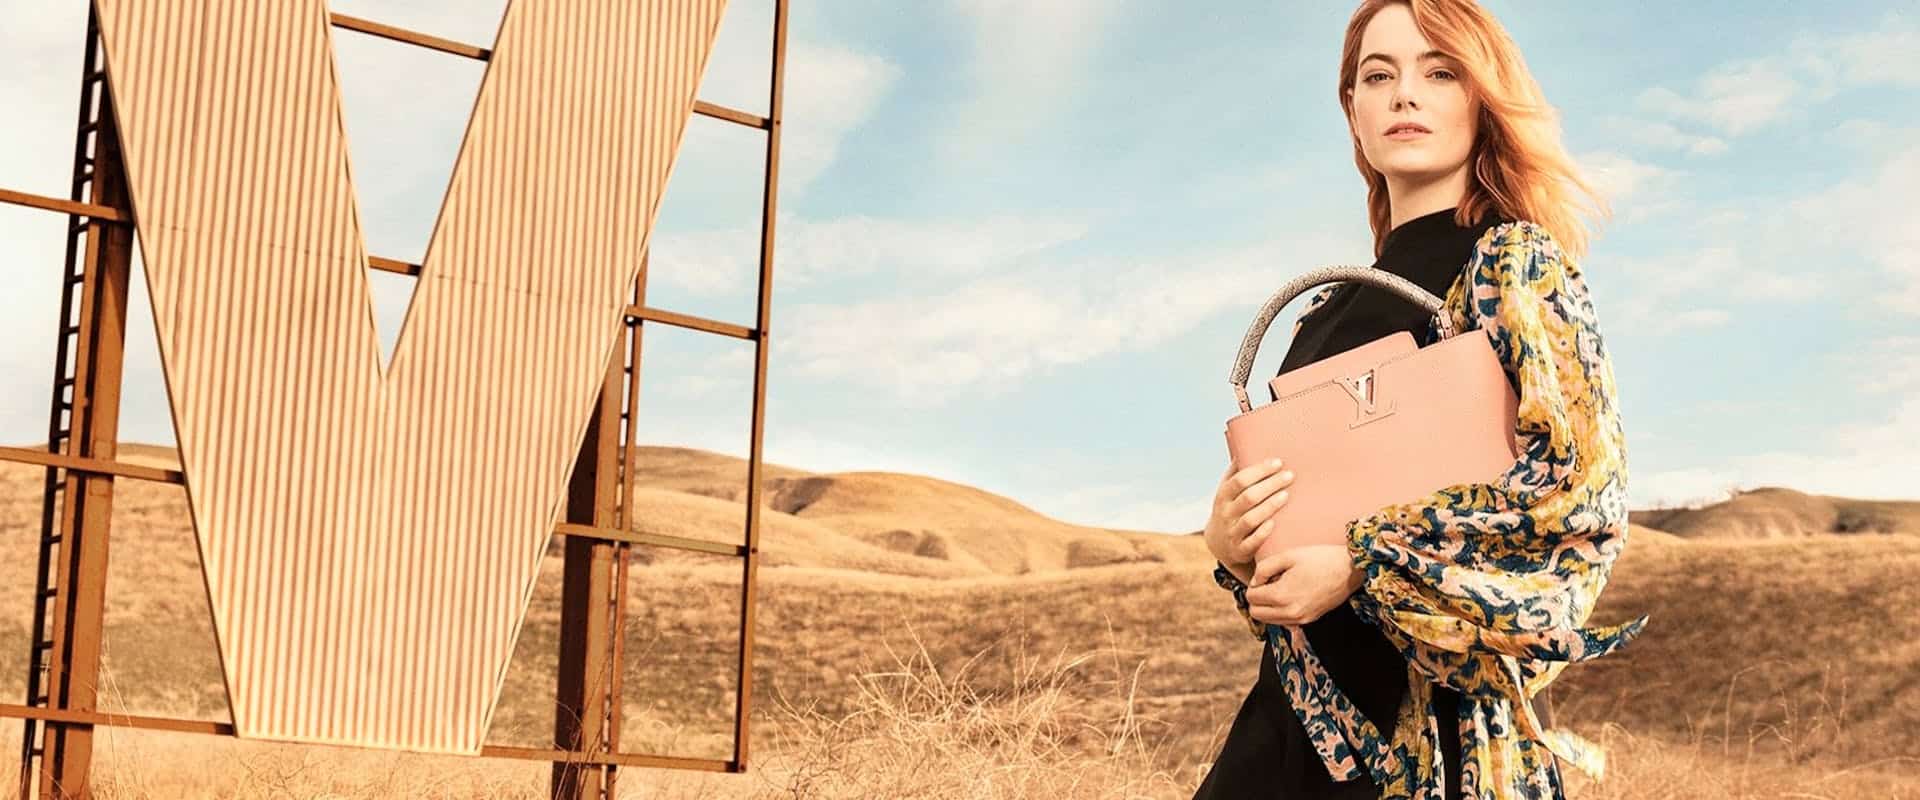 Emma Stone è la nuova testimonial di Louis Vuitton